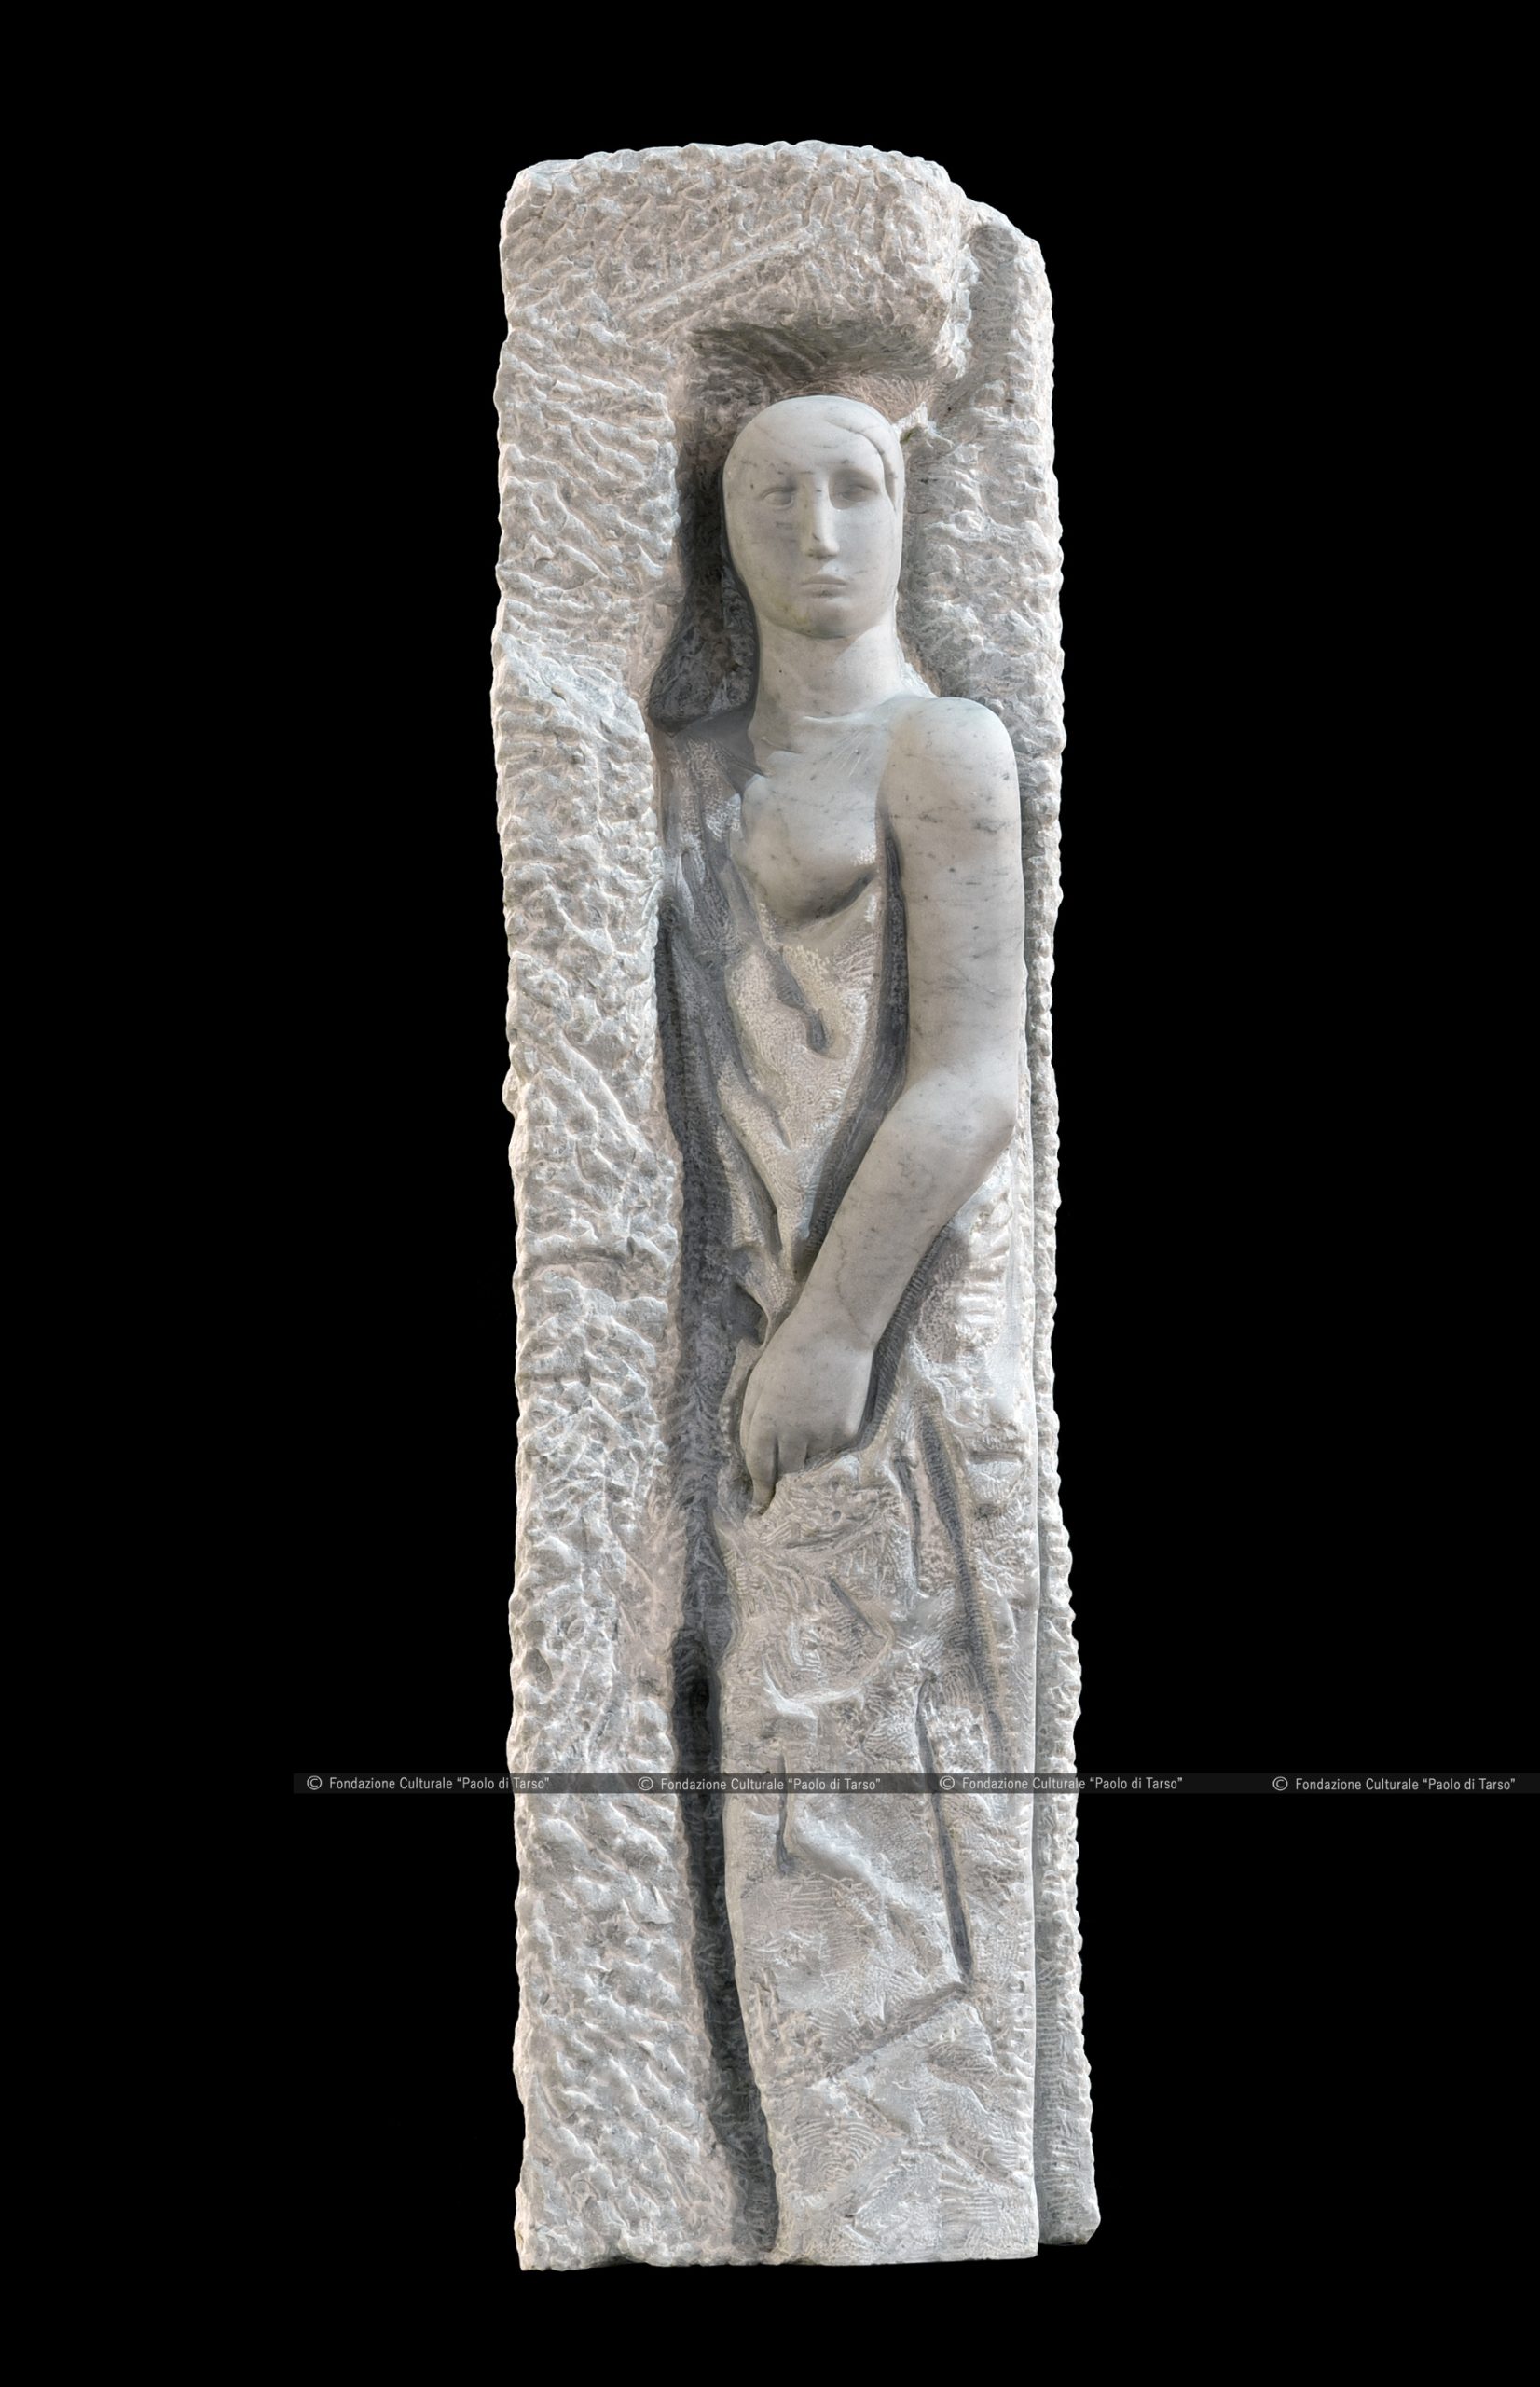 Metaverso Cosenza - MAB - Pinacoteca - “Cariatide” 1940 di Mario SIRONI, scultura in marmo bianco di Carrara